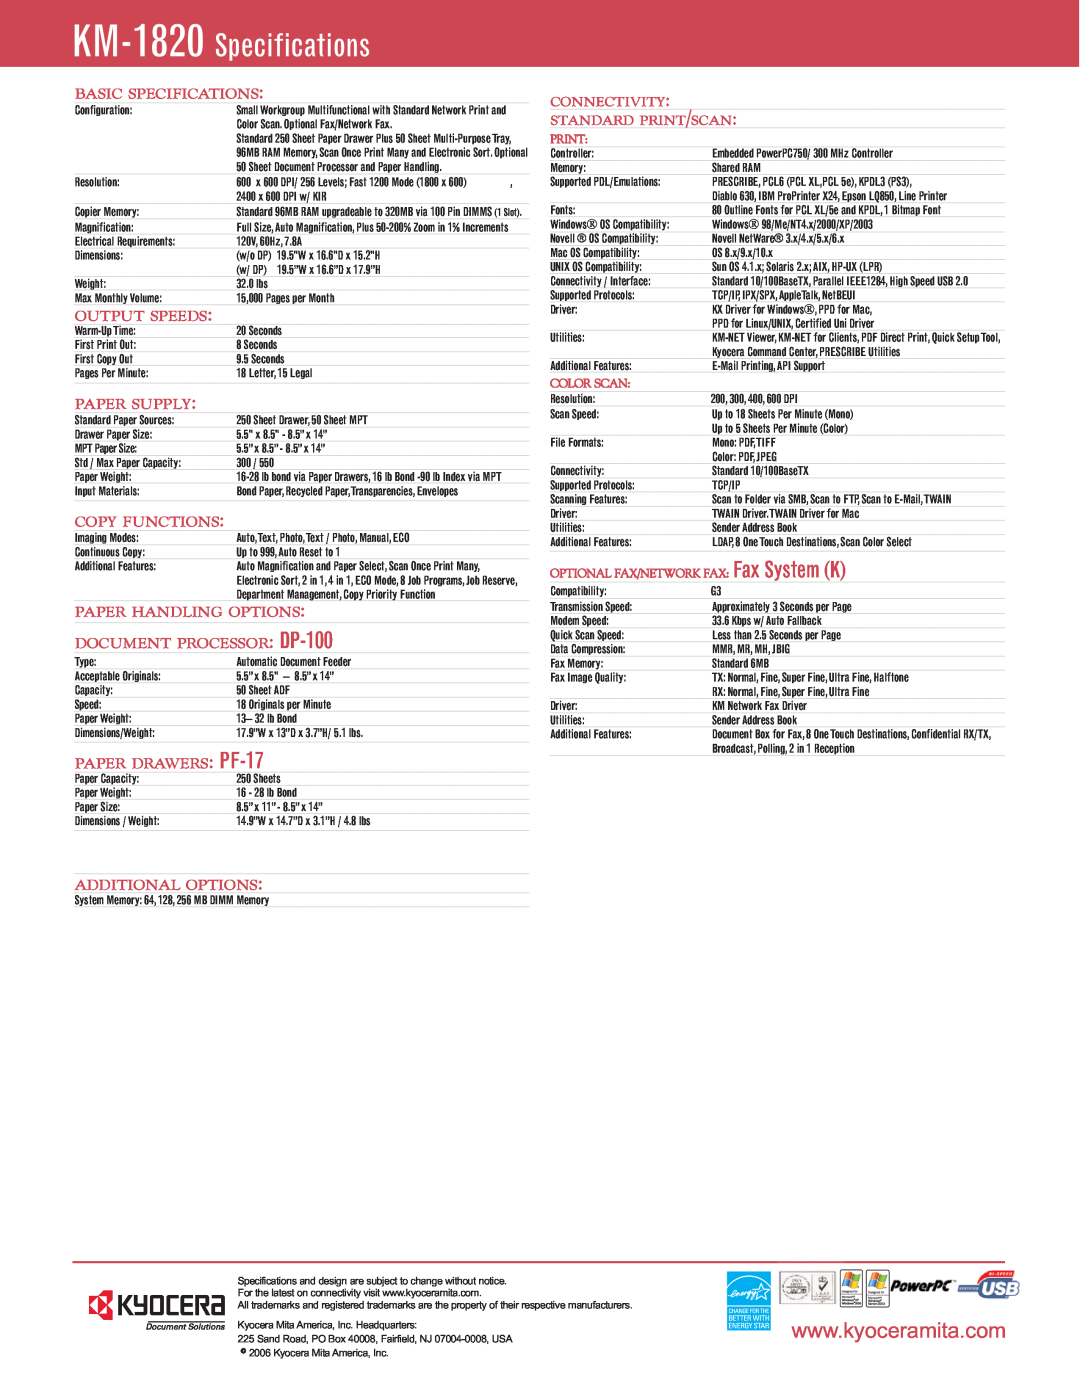 Kyocera setup guide Network Scanner Setup Guide, KM-1820 FS-1118MFP 